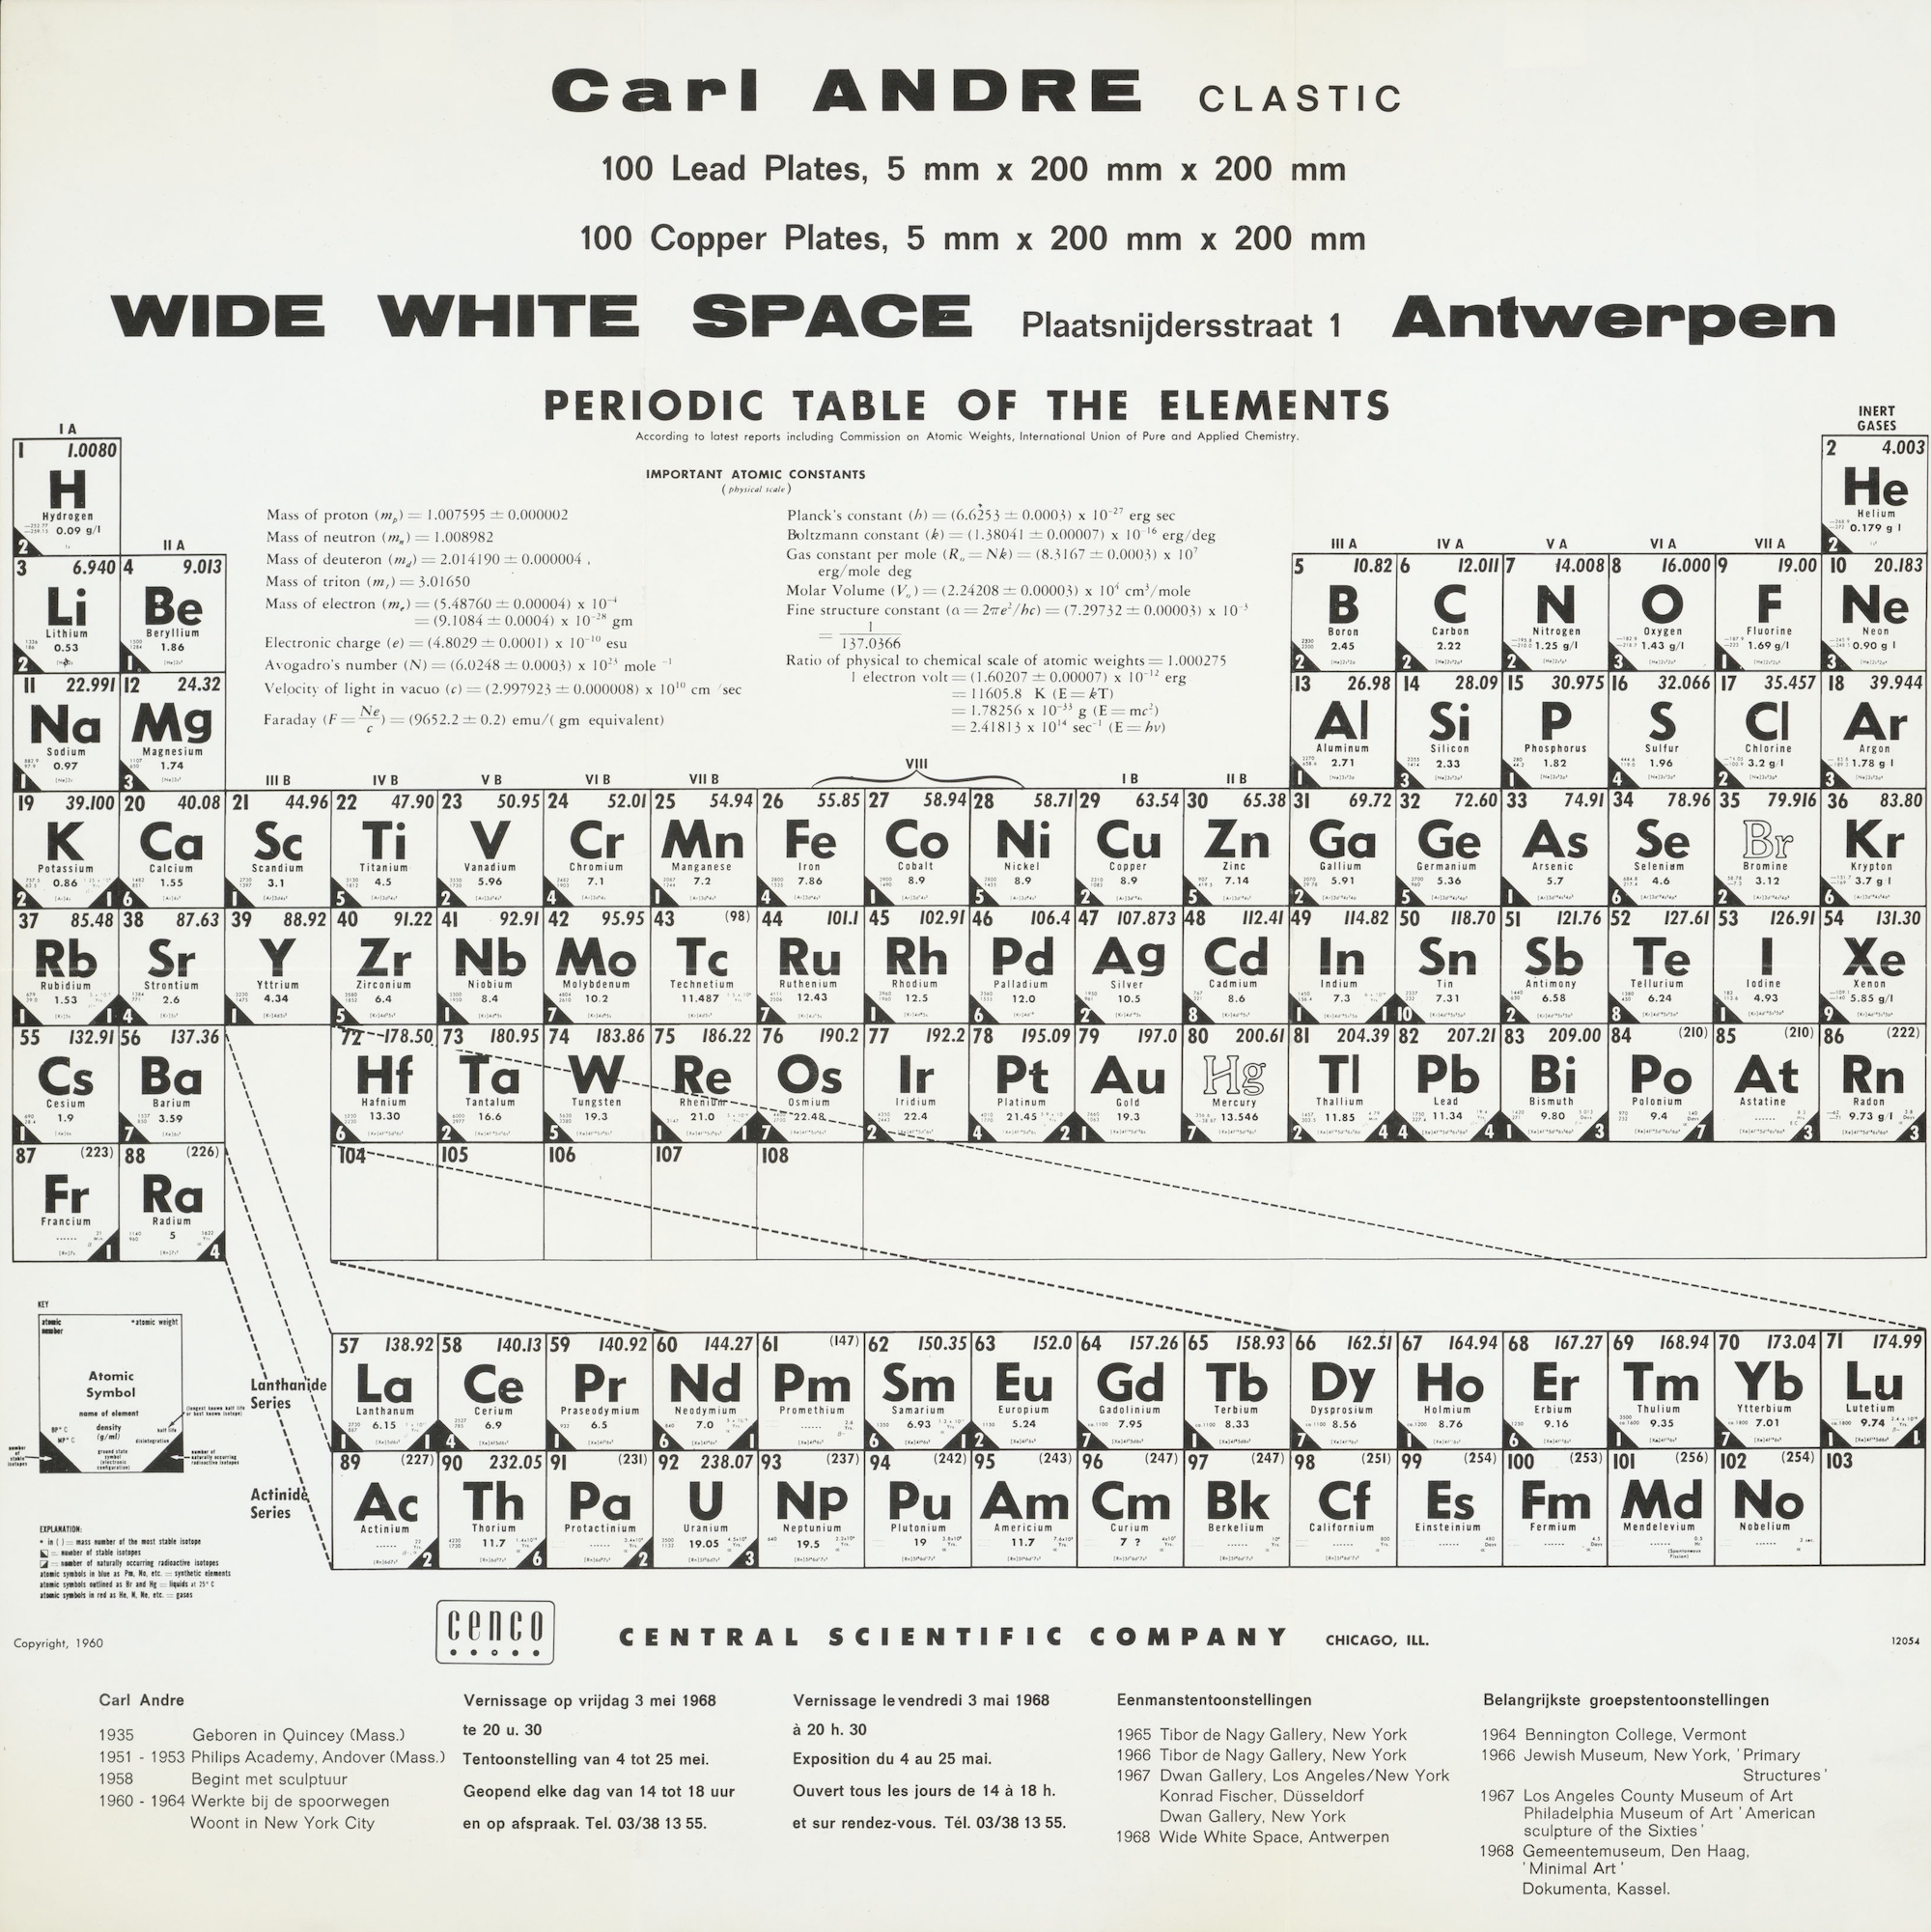 Carl Andre,
CLASTIC at WIDE WHITE SPACE, 1968 (invitation Poster); Sammlung Marzona, Kunstbibliothek – Staatliche Museen zu Berlin
